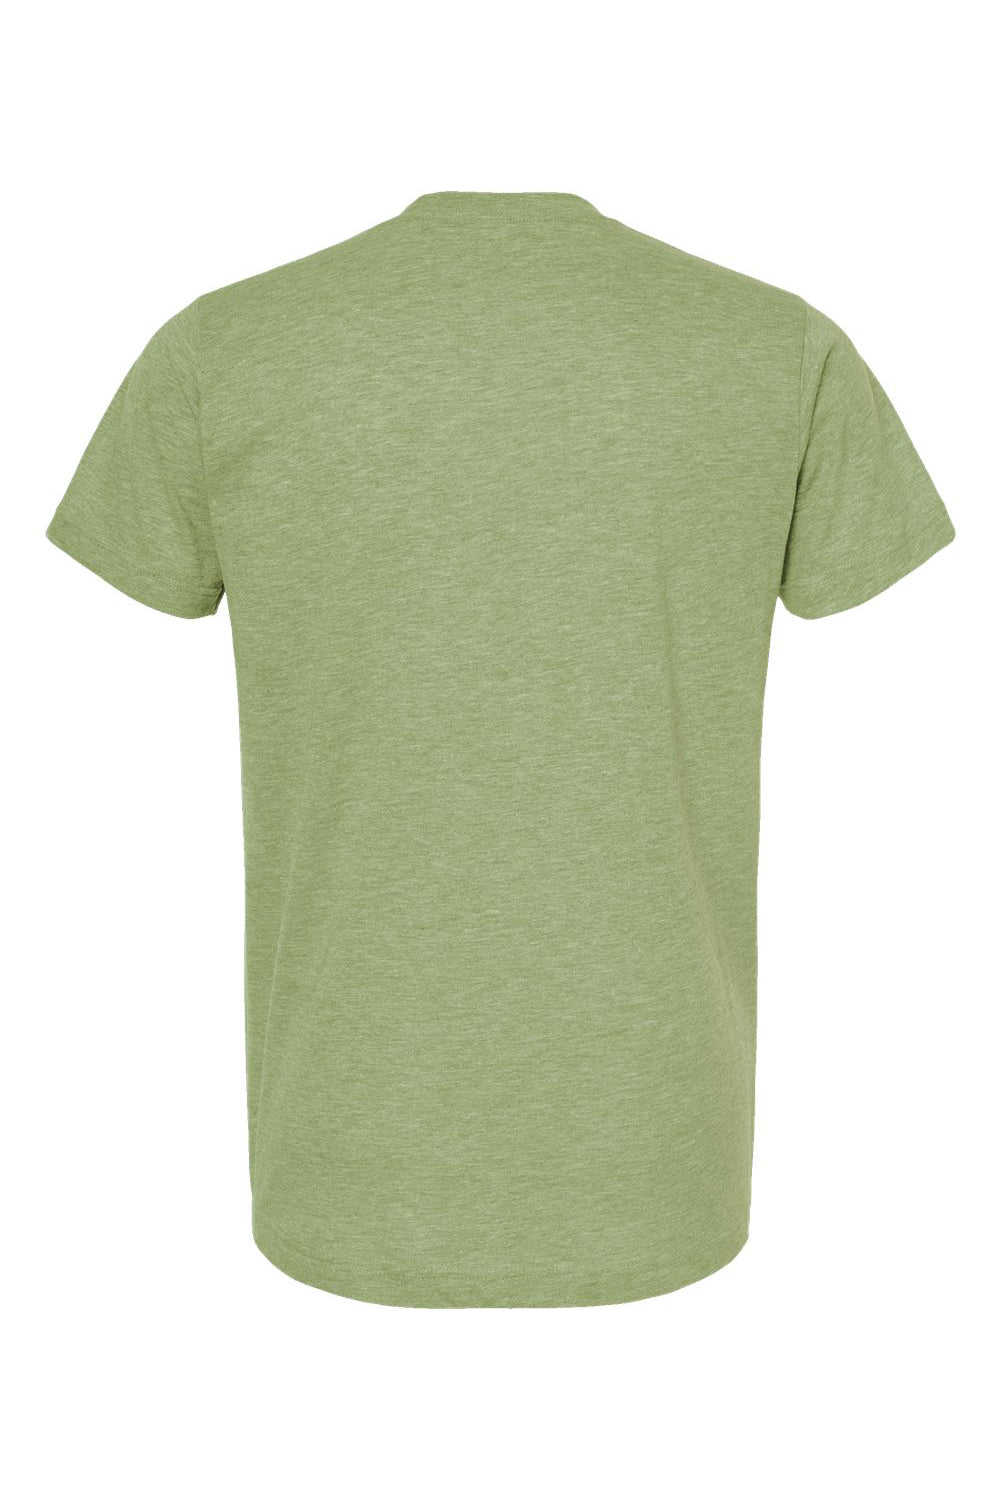 Tultex 241 Mens Poly-Rich Short Sleeve Crewneck T-Shirt Heather Green Flat Back